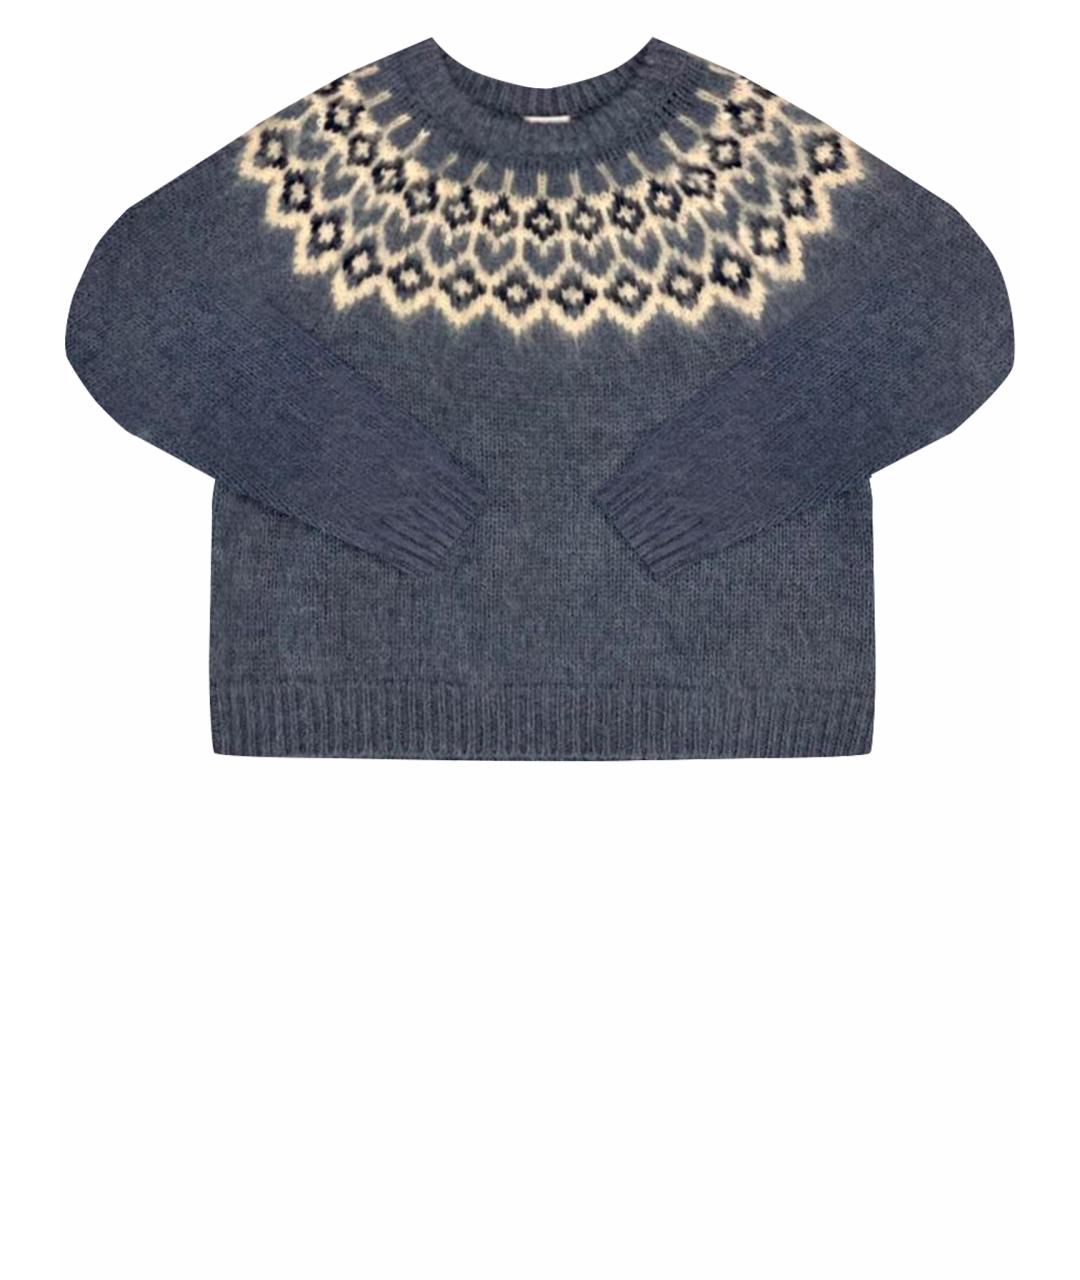 CELINE PRE-OWNED Голубой шерстяной джемпер / свитер, фото 1